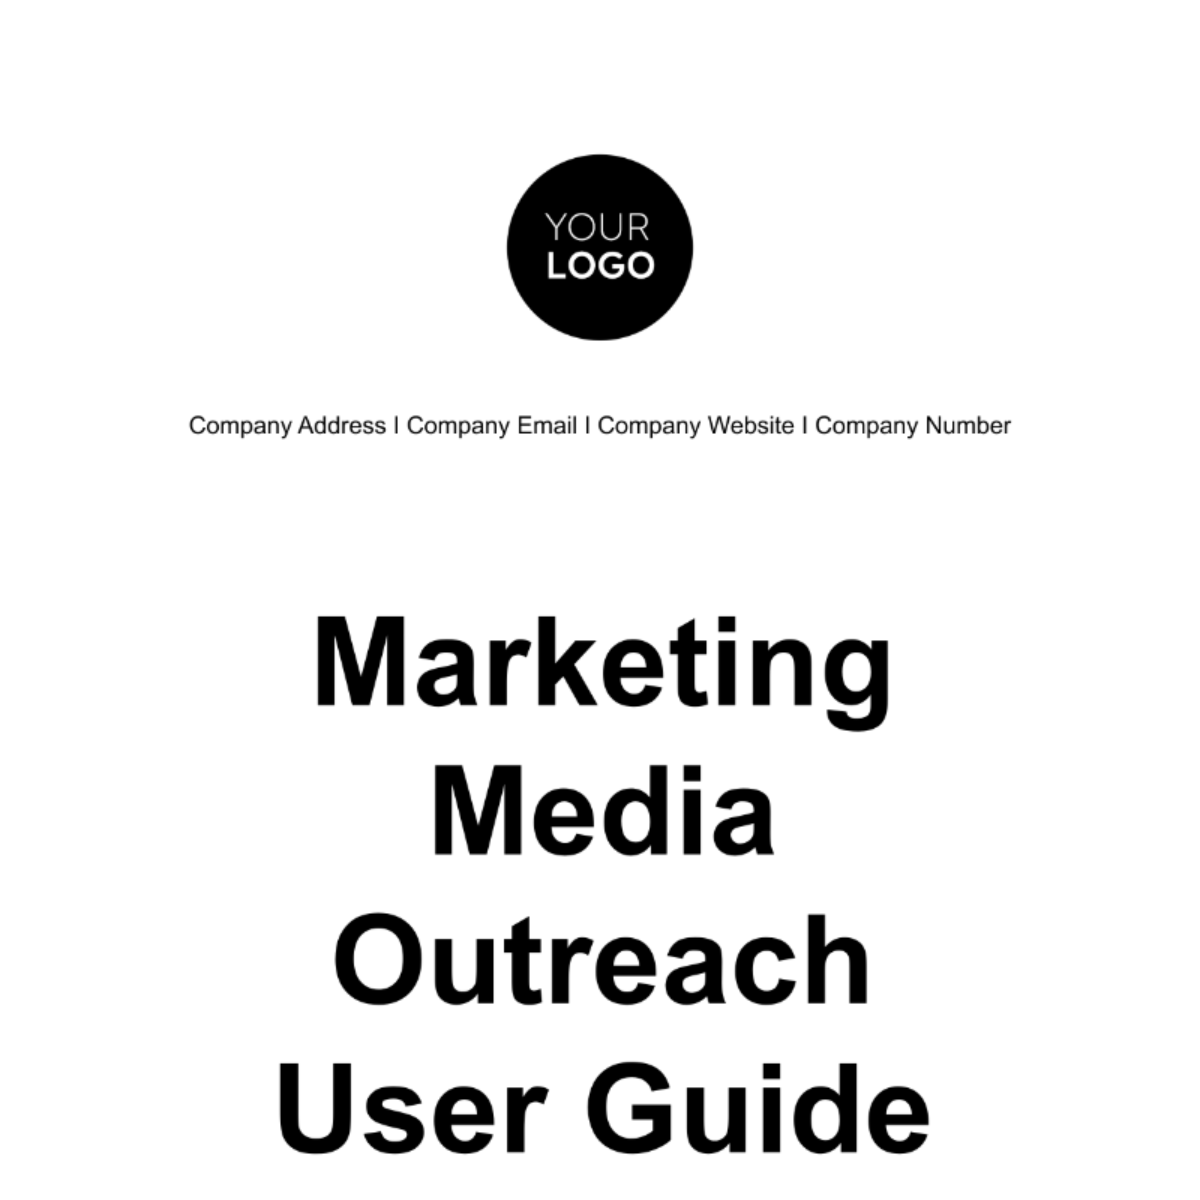 Marketing Media Outreach User Guide Template